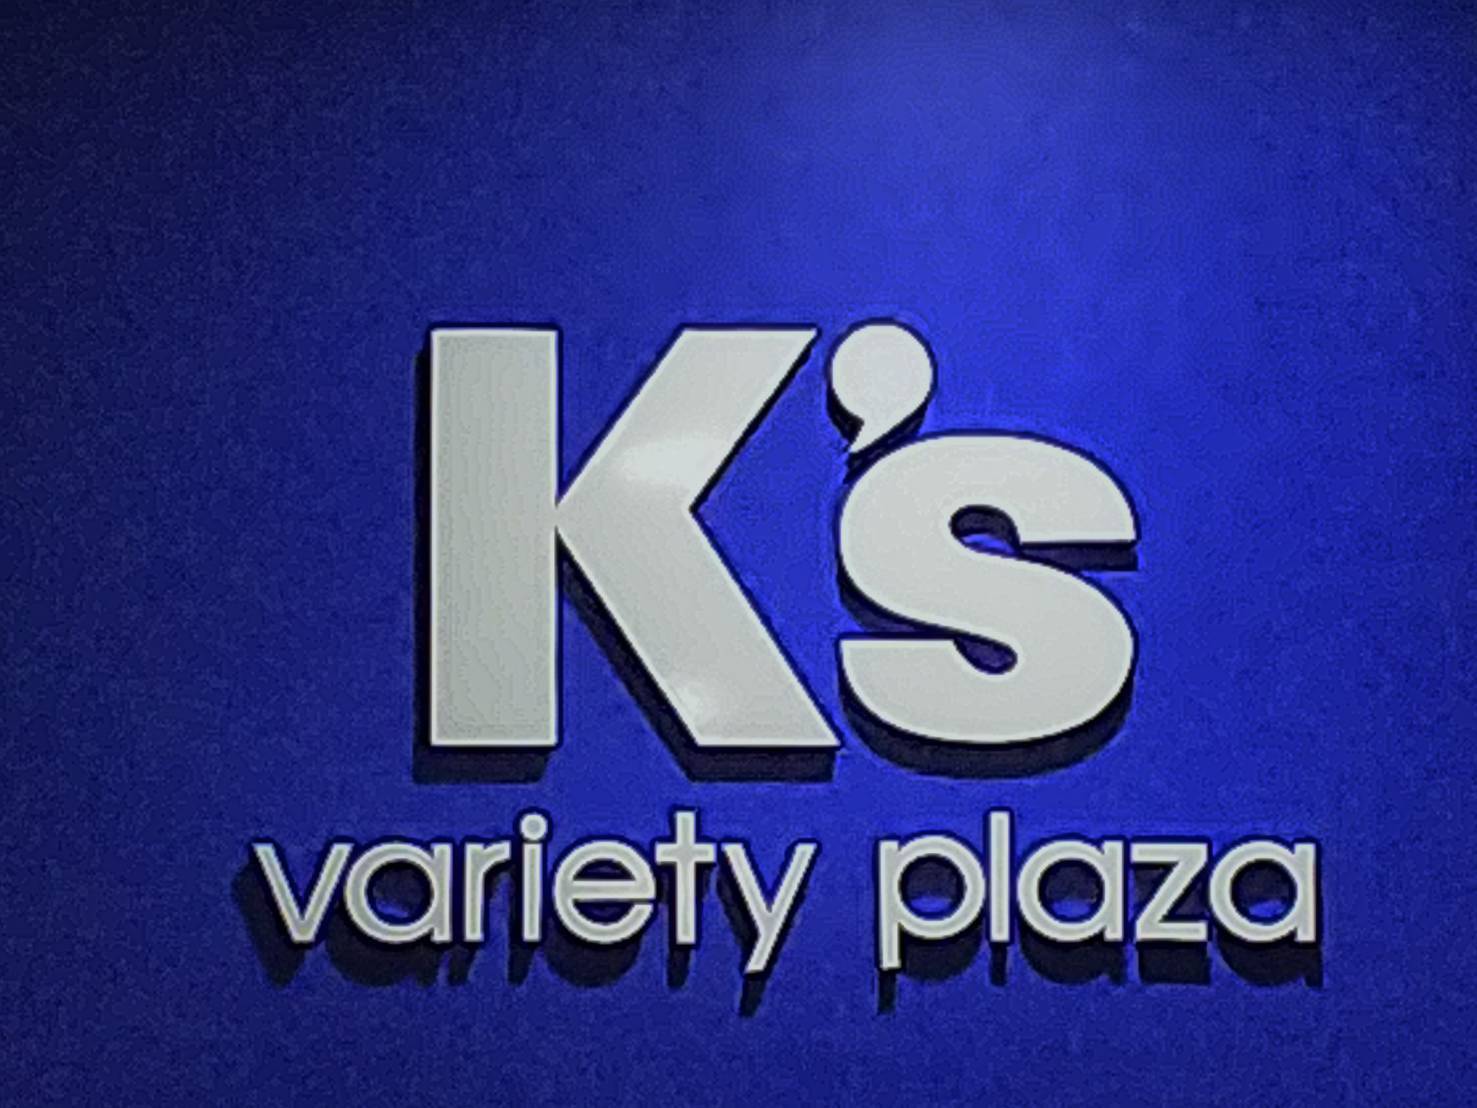 K's variety plaza(ケイズバラエティプラザ)・海岸創庫